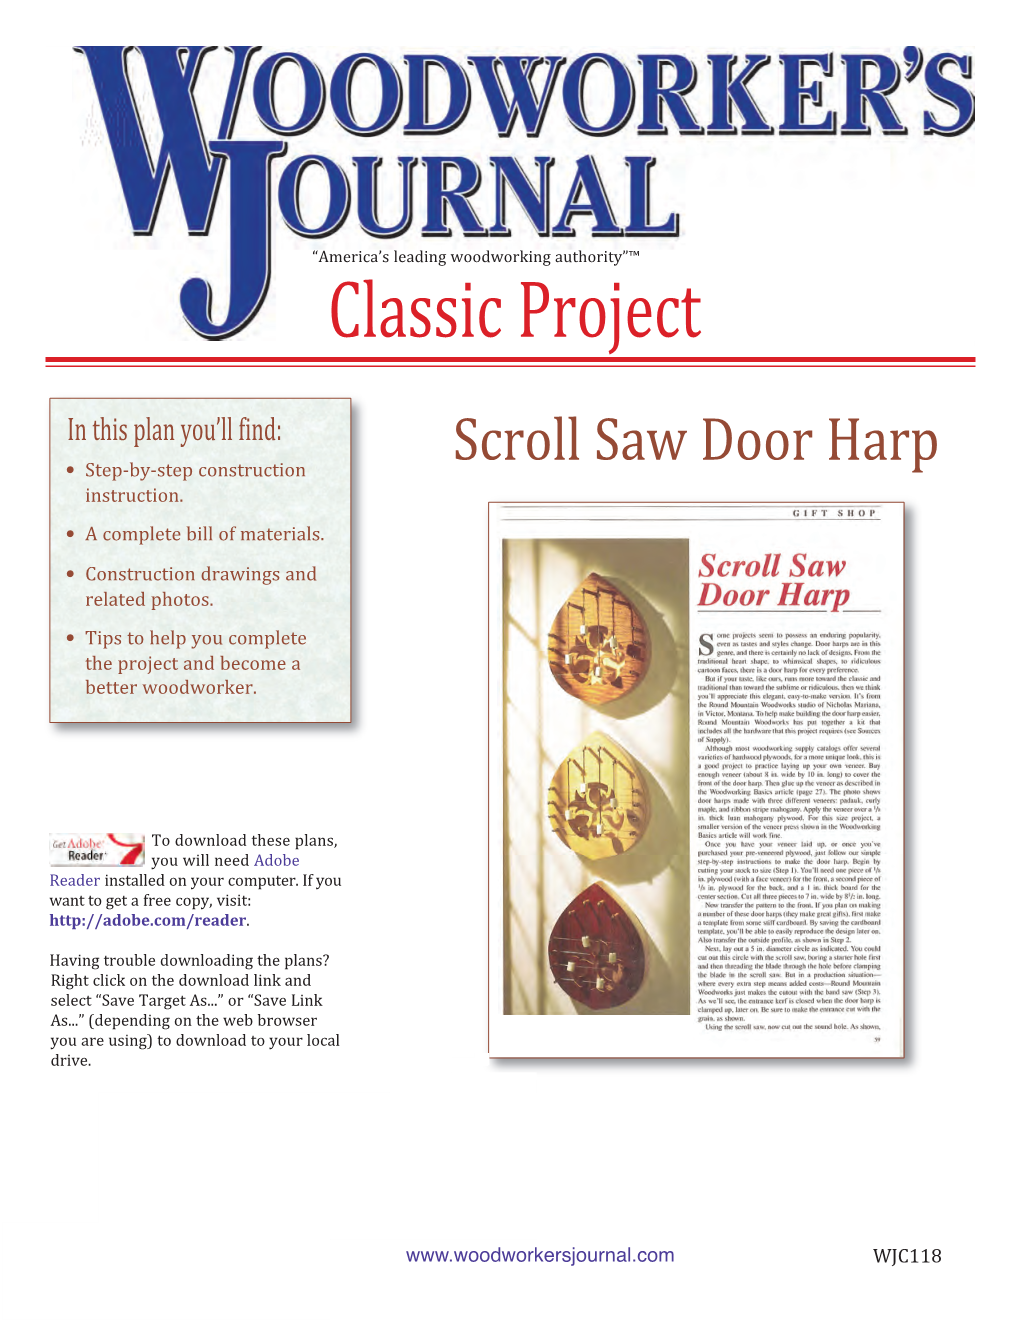 Scroll Saw Door Harp Instruction